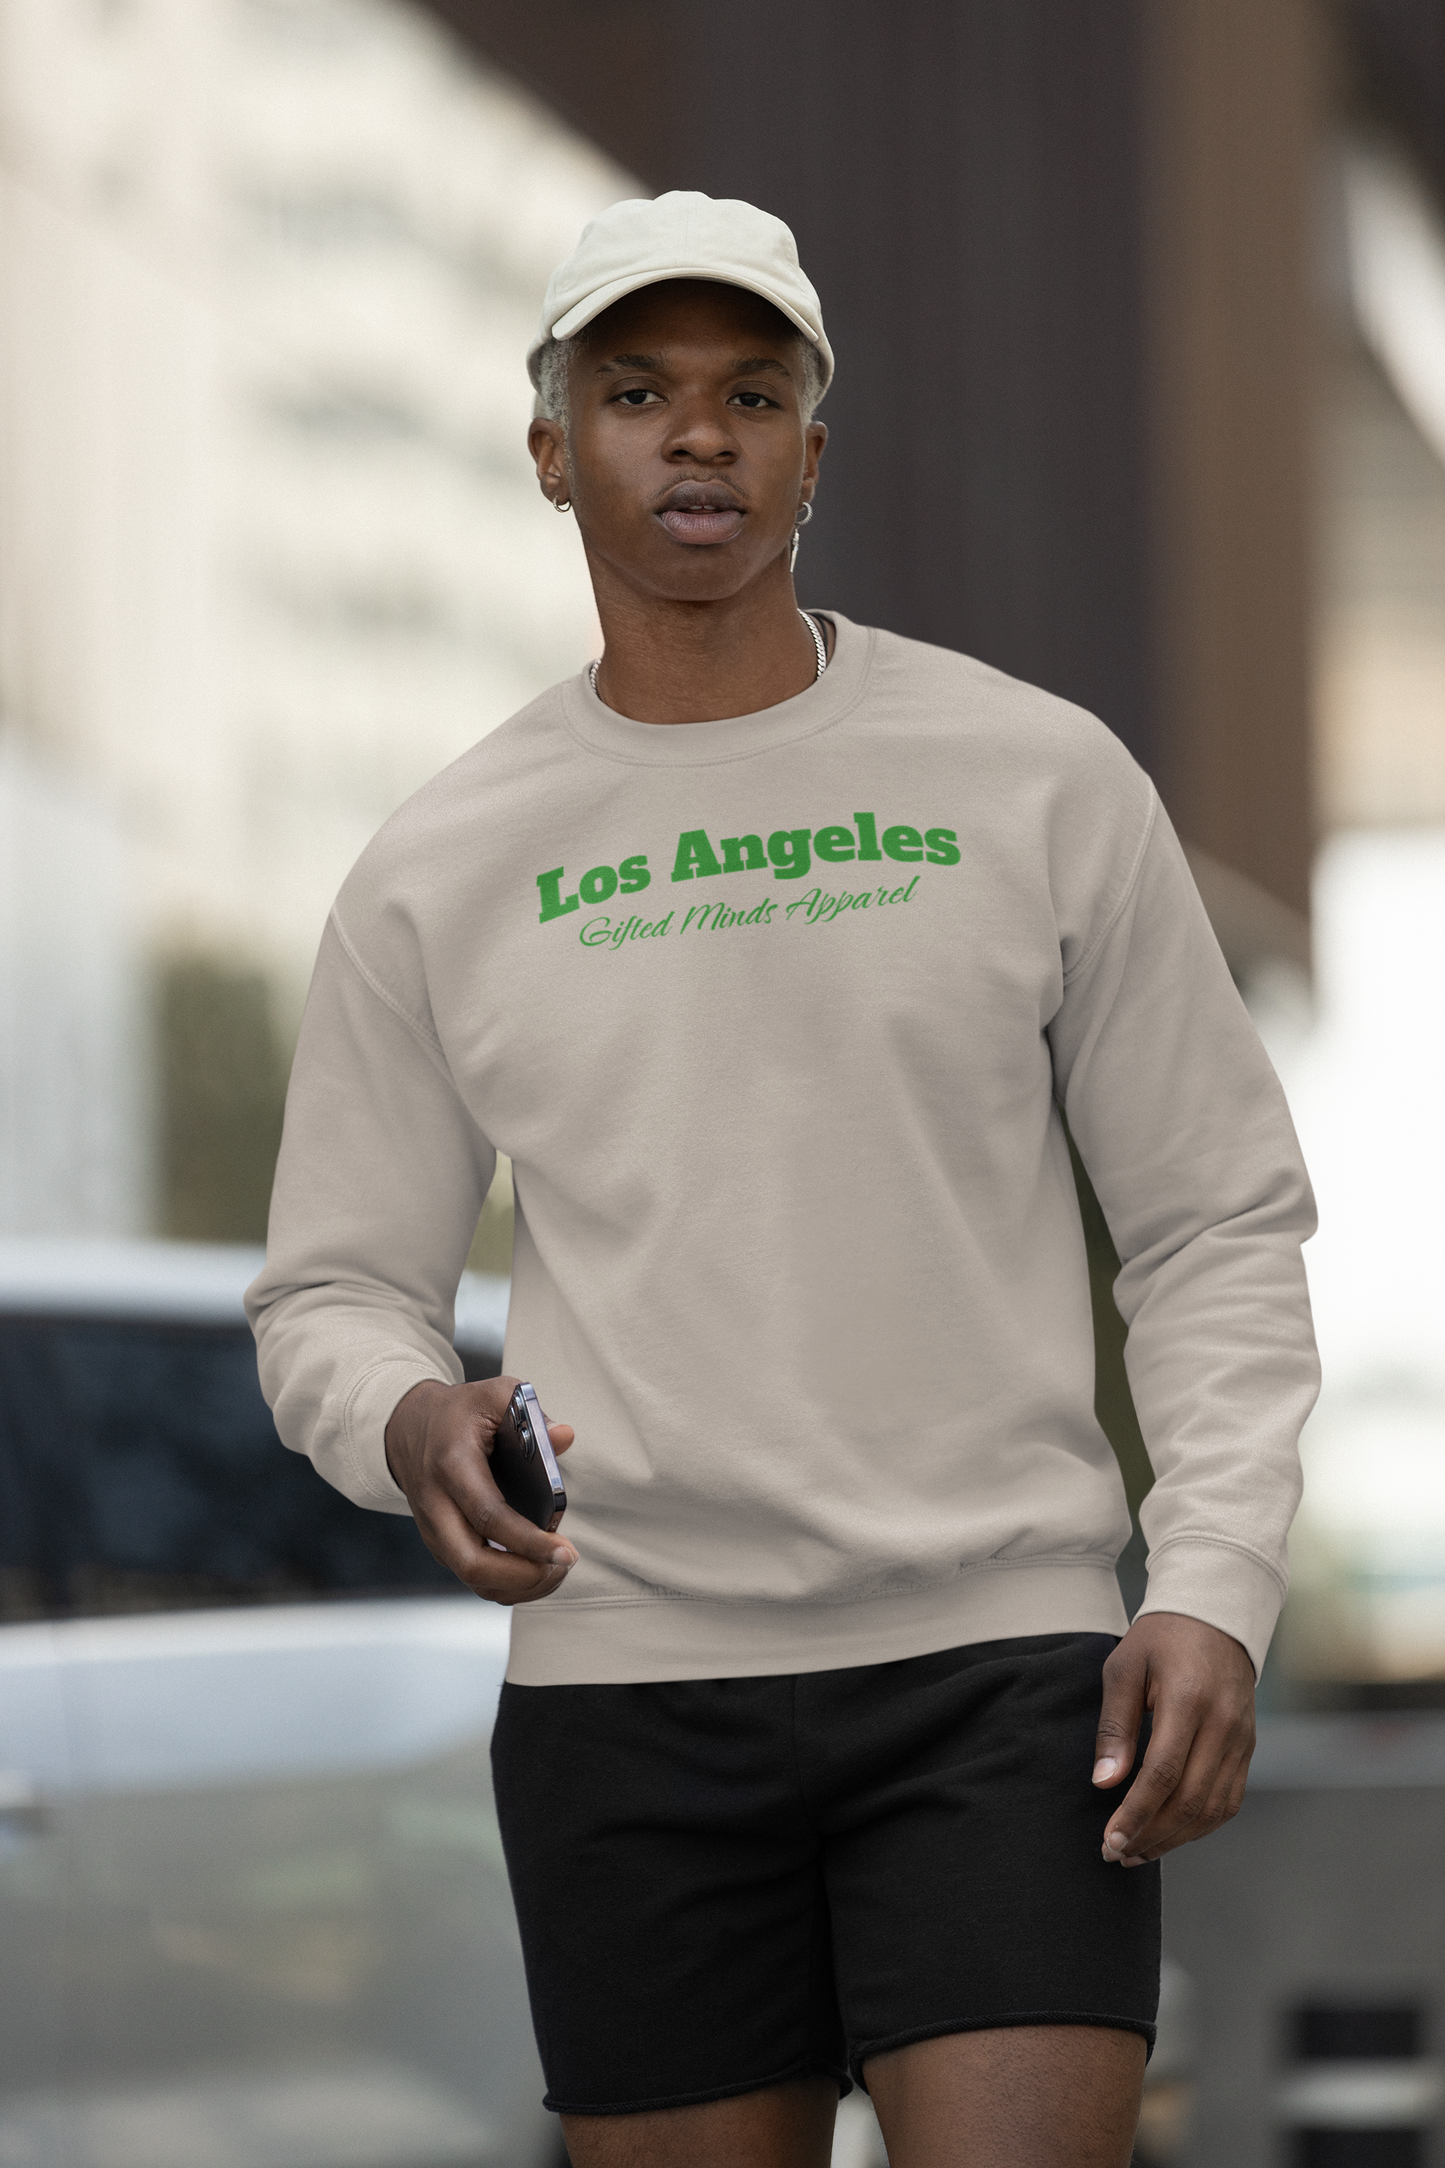 Los Angeles Crewneck Sweatshirt - GFTD MNDS